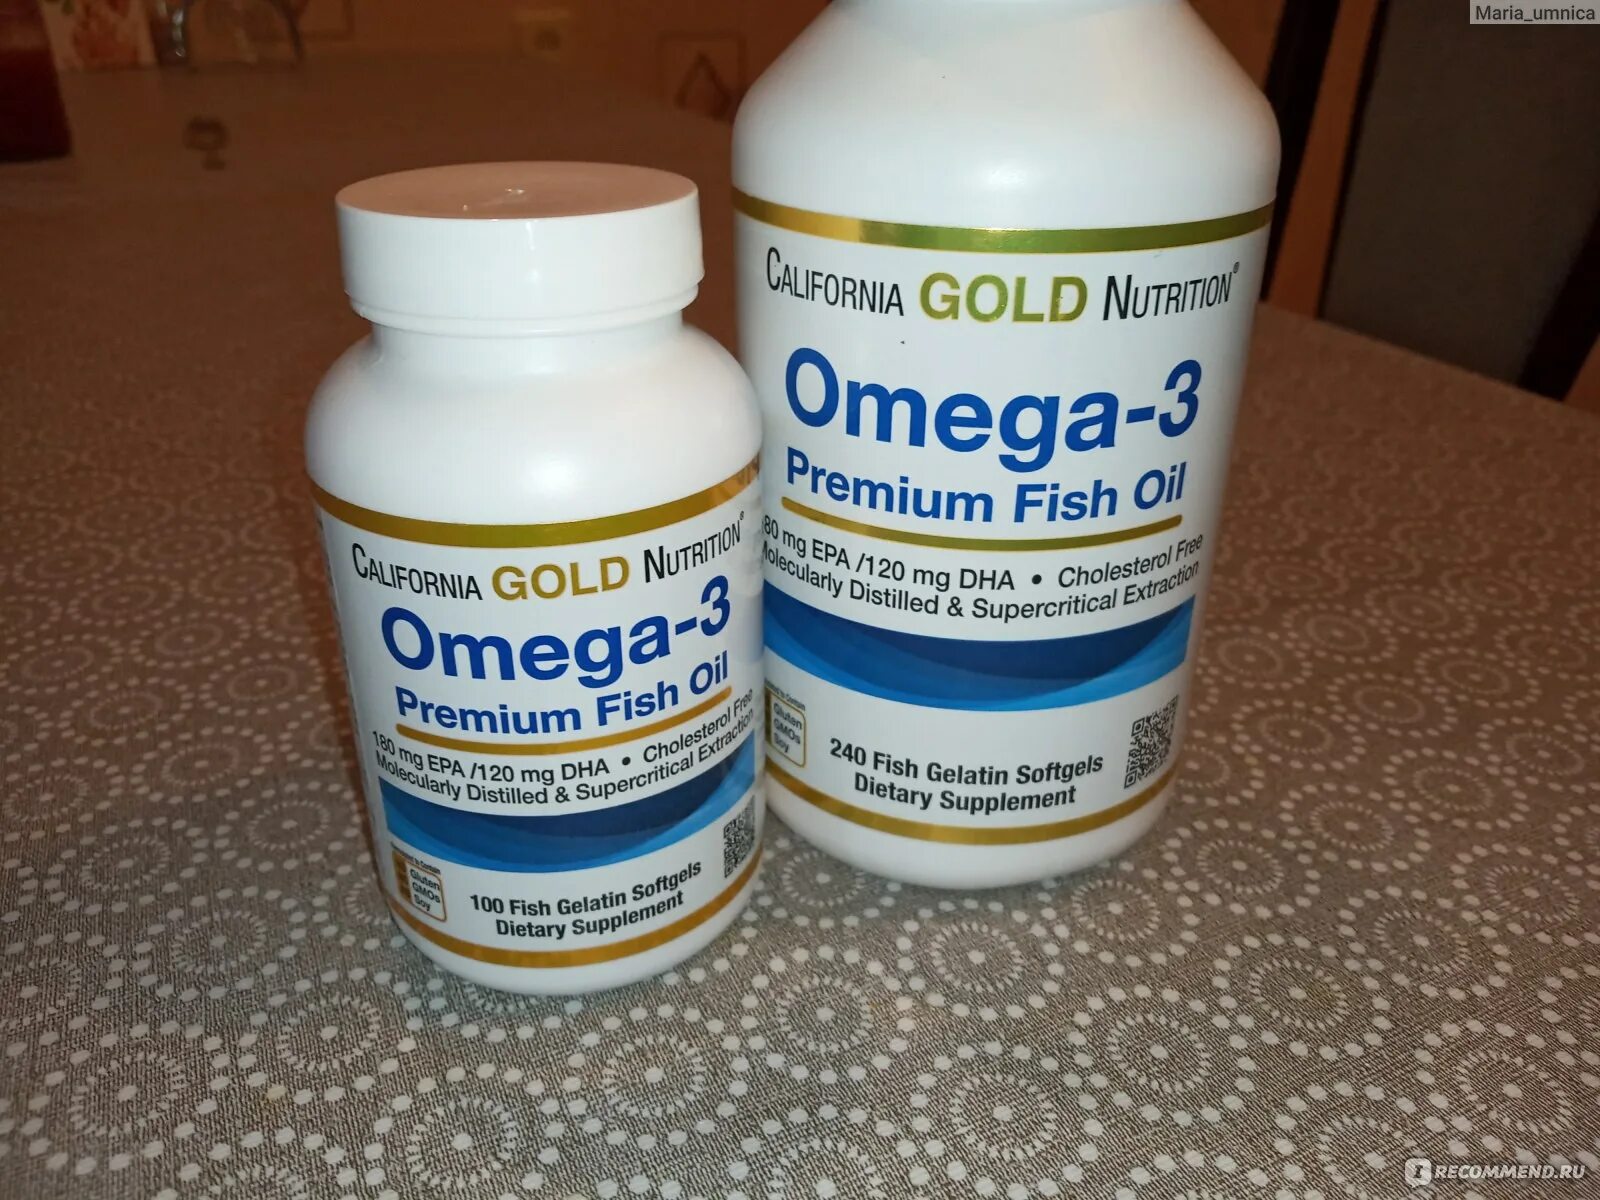 California Gold Nutrition Omega-3 Premium Fish Oil. California Gold Nutrition Omega-3 Premium Fish Oil капсулы. Омега 3 Калифорния Голд Нутришн.